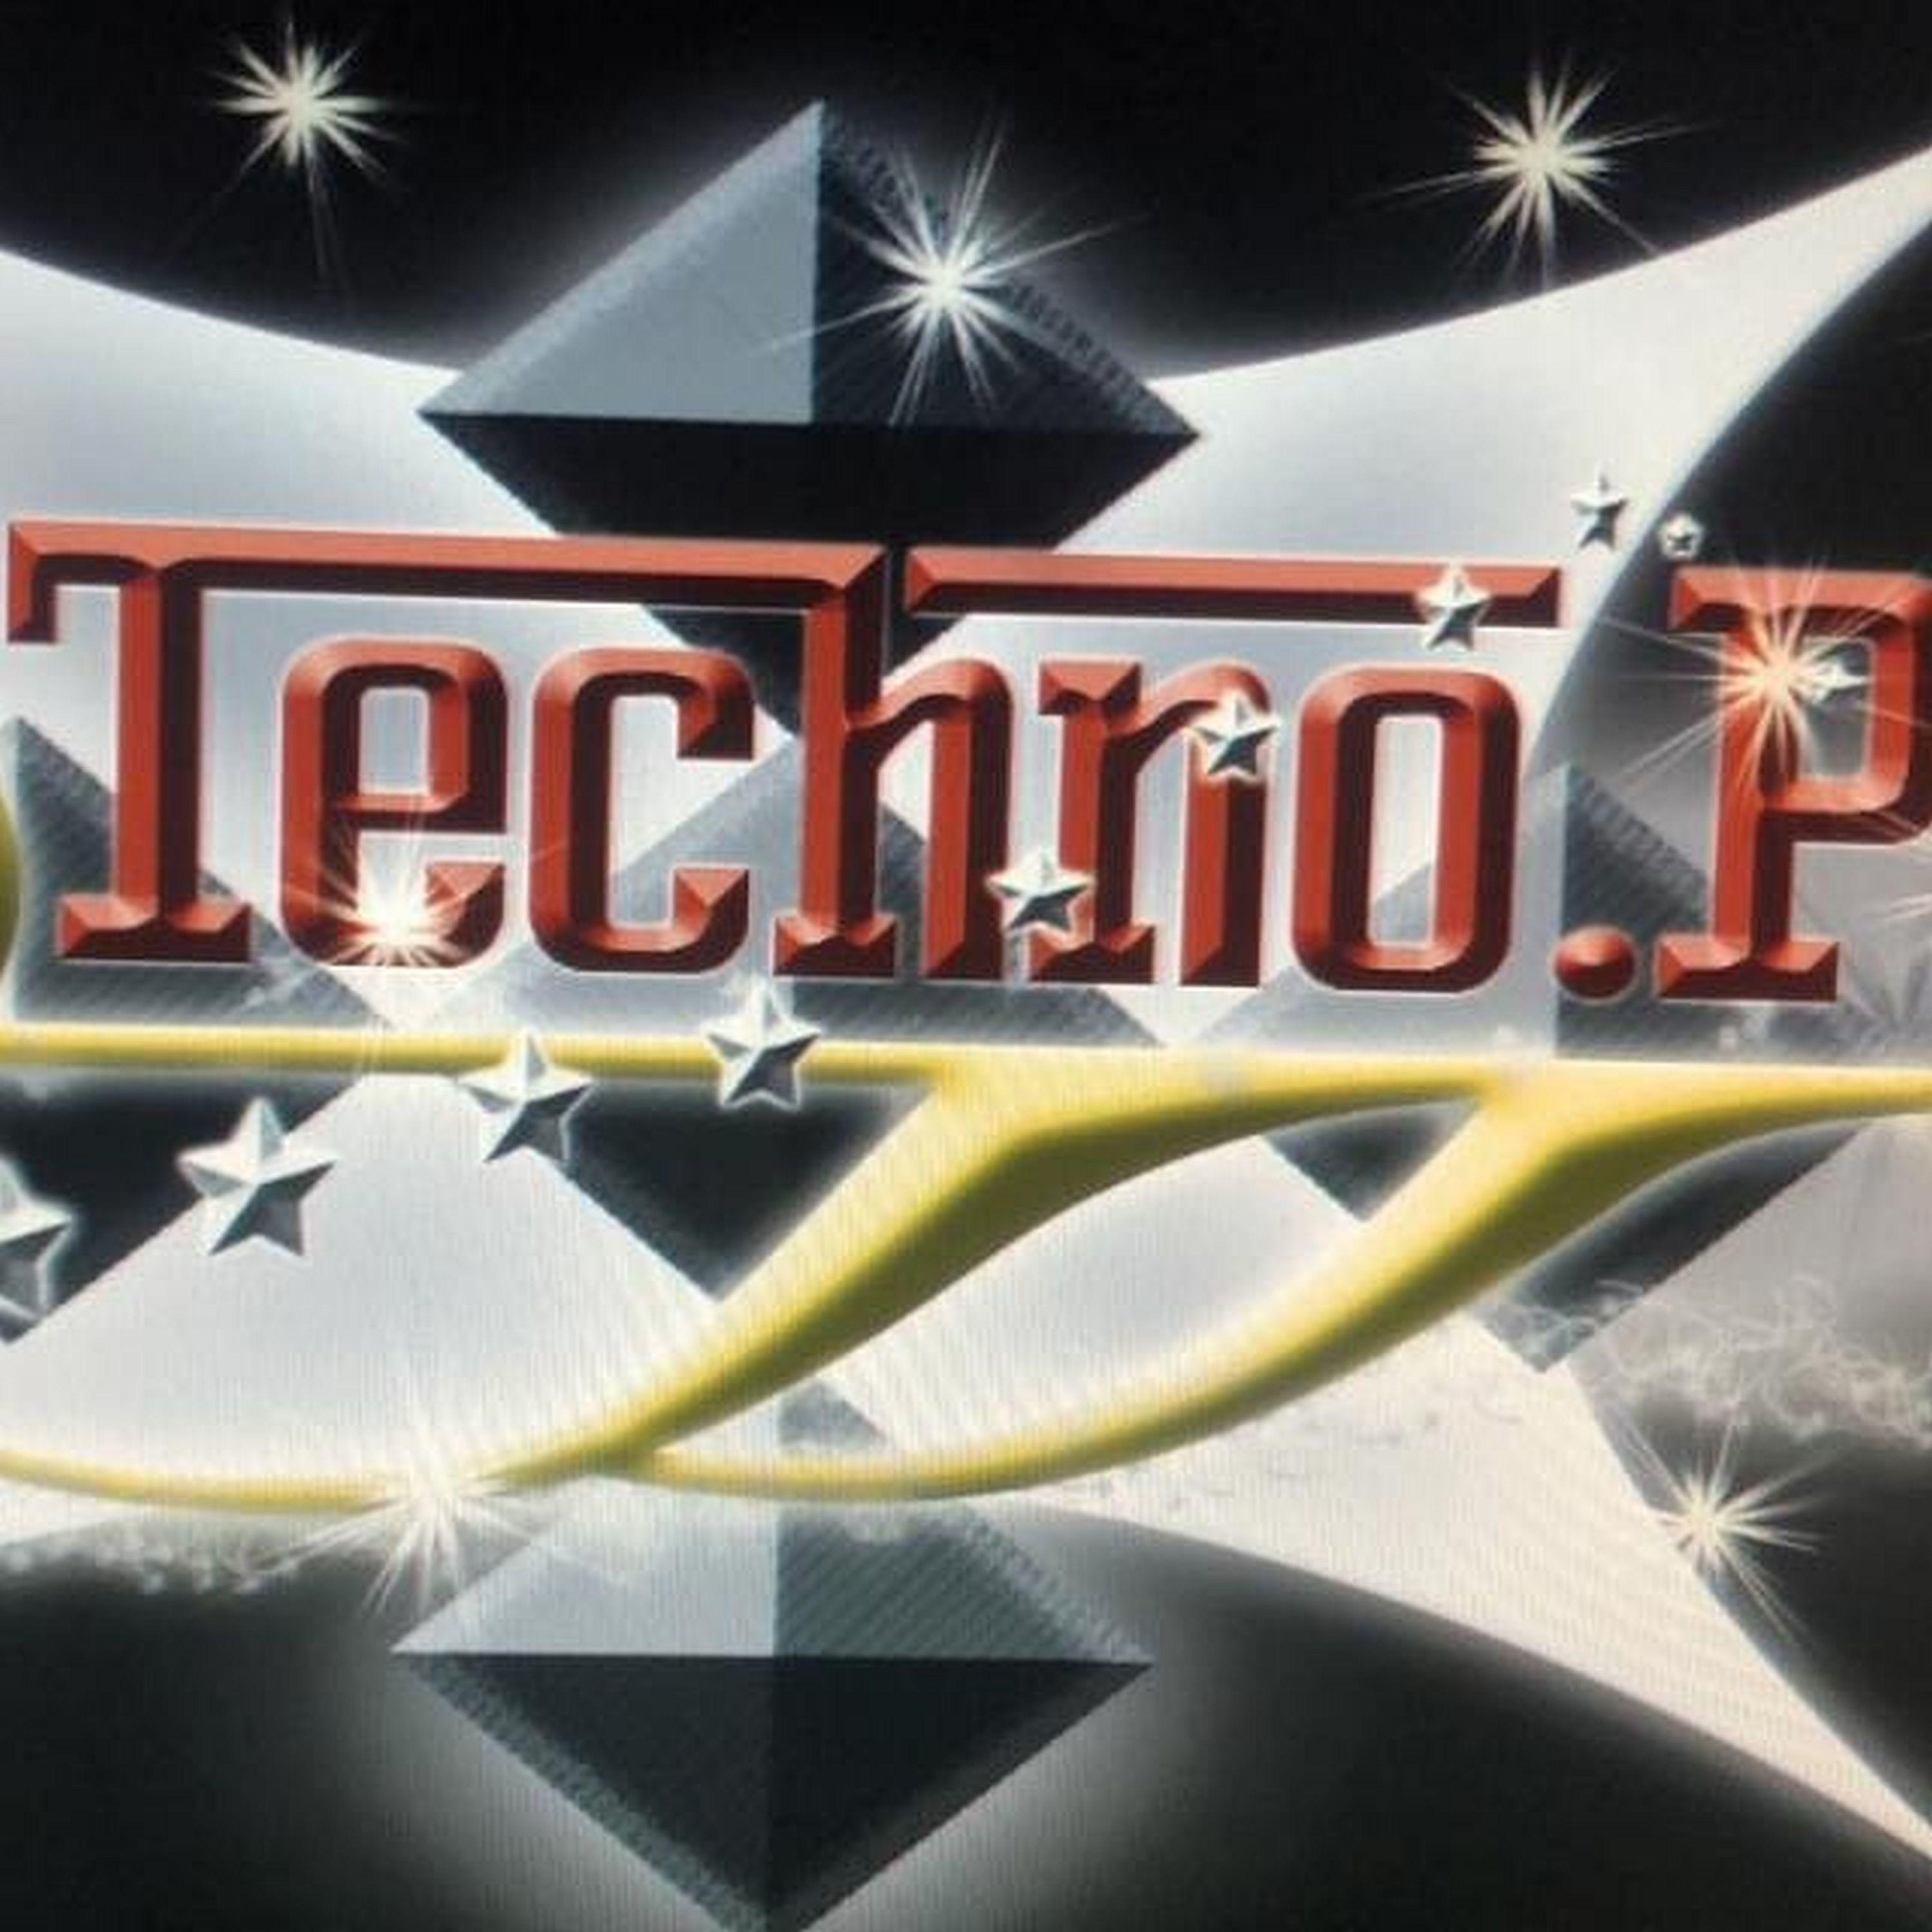 Постер альбома Techno P